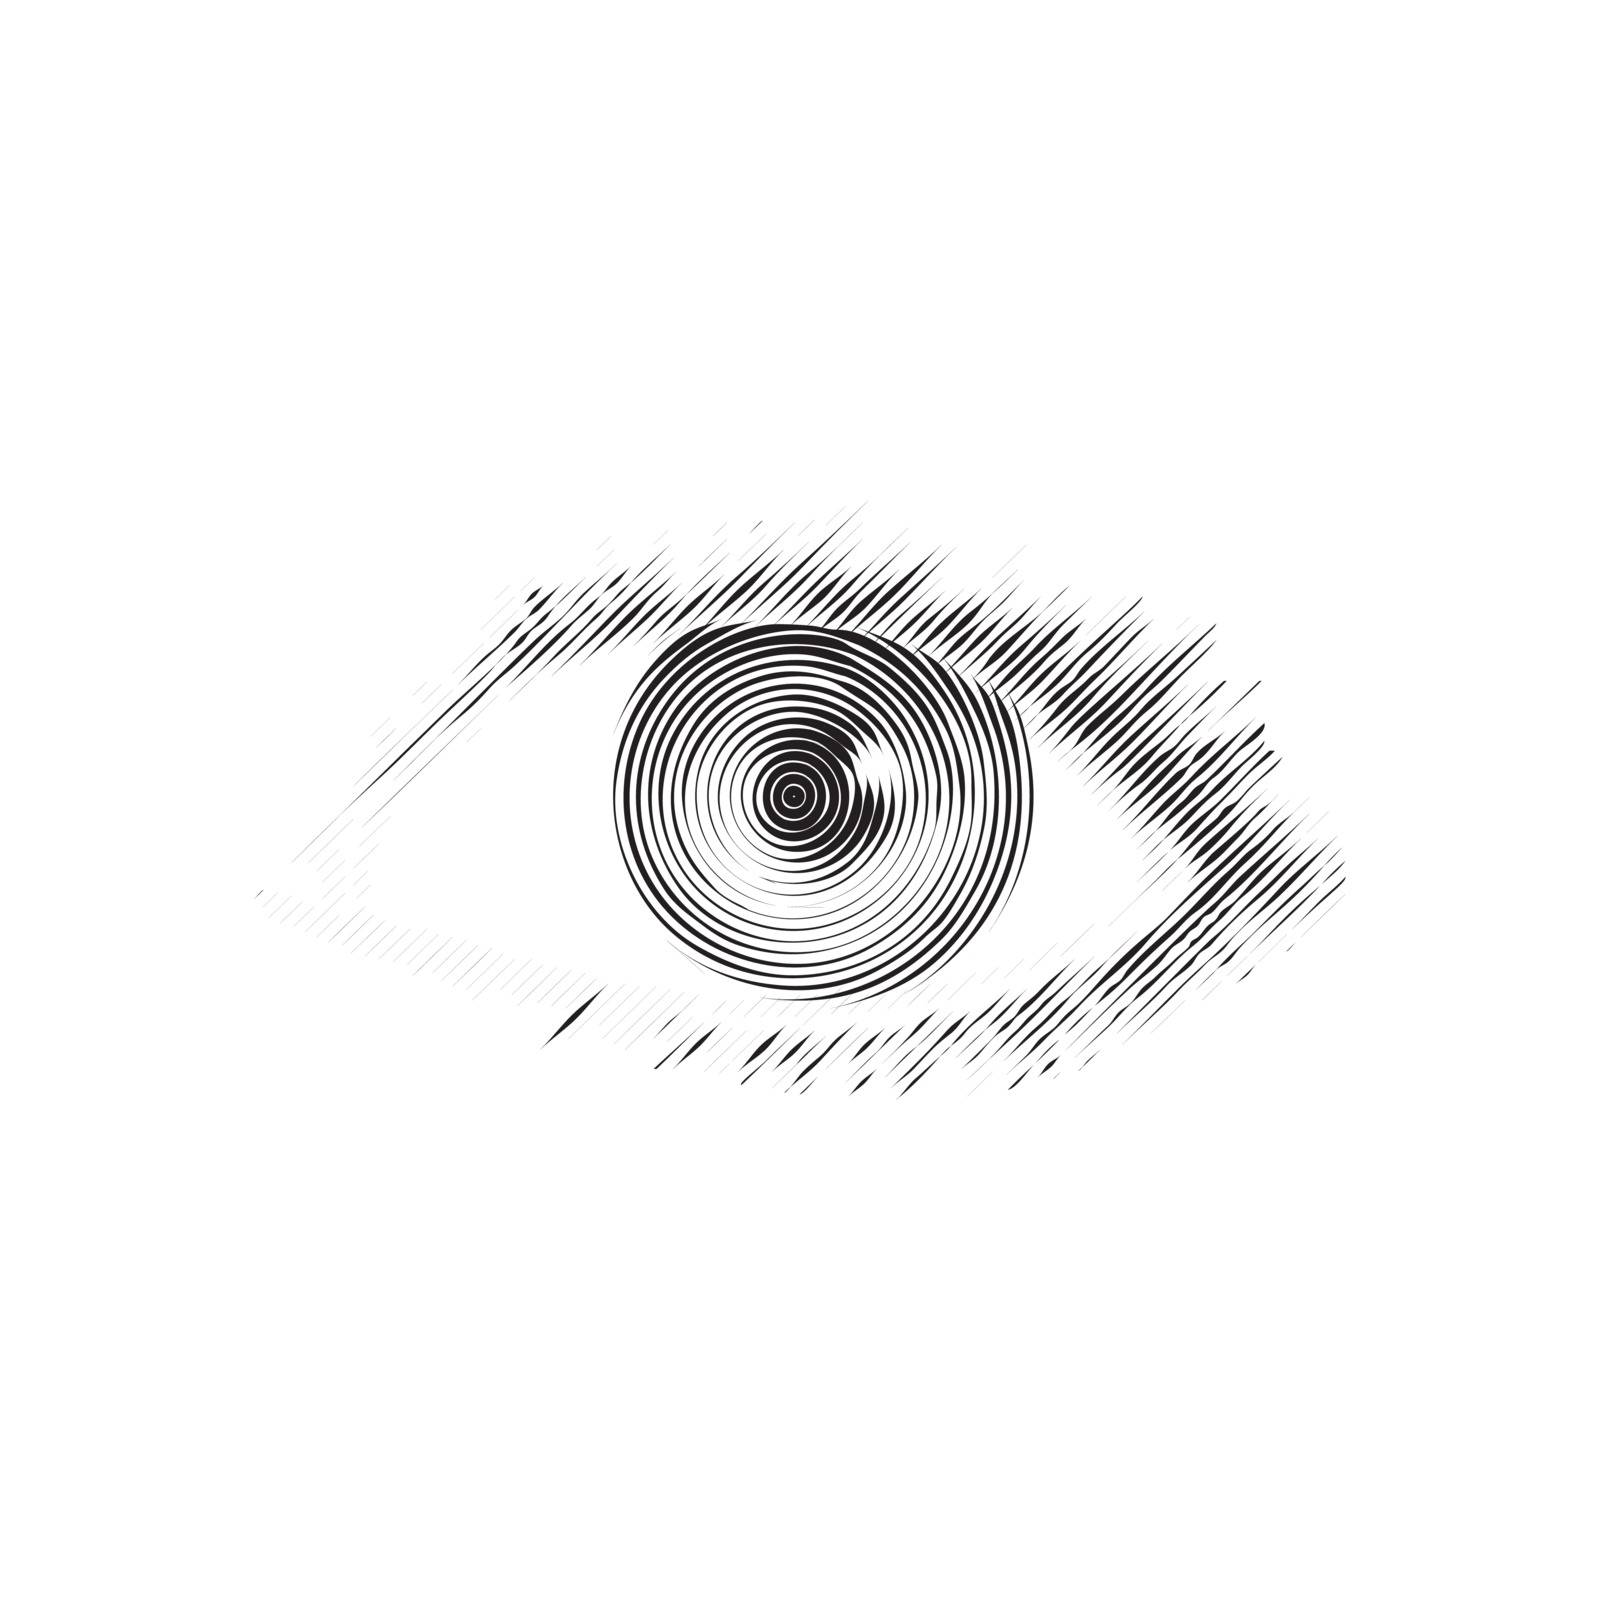 Vector illustration of human eye in vintage engraved style. Isolatedon white background. Element of design